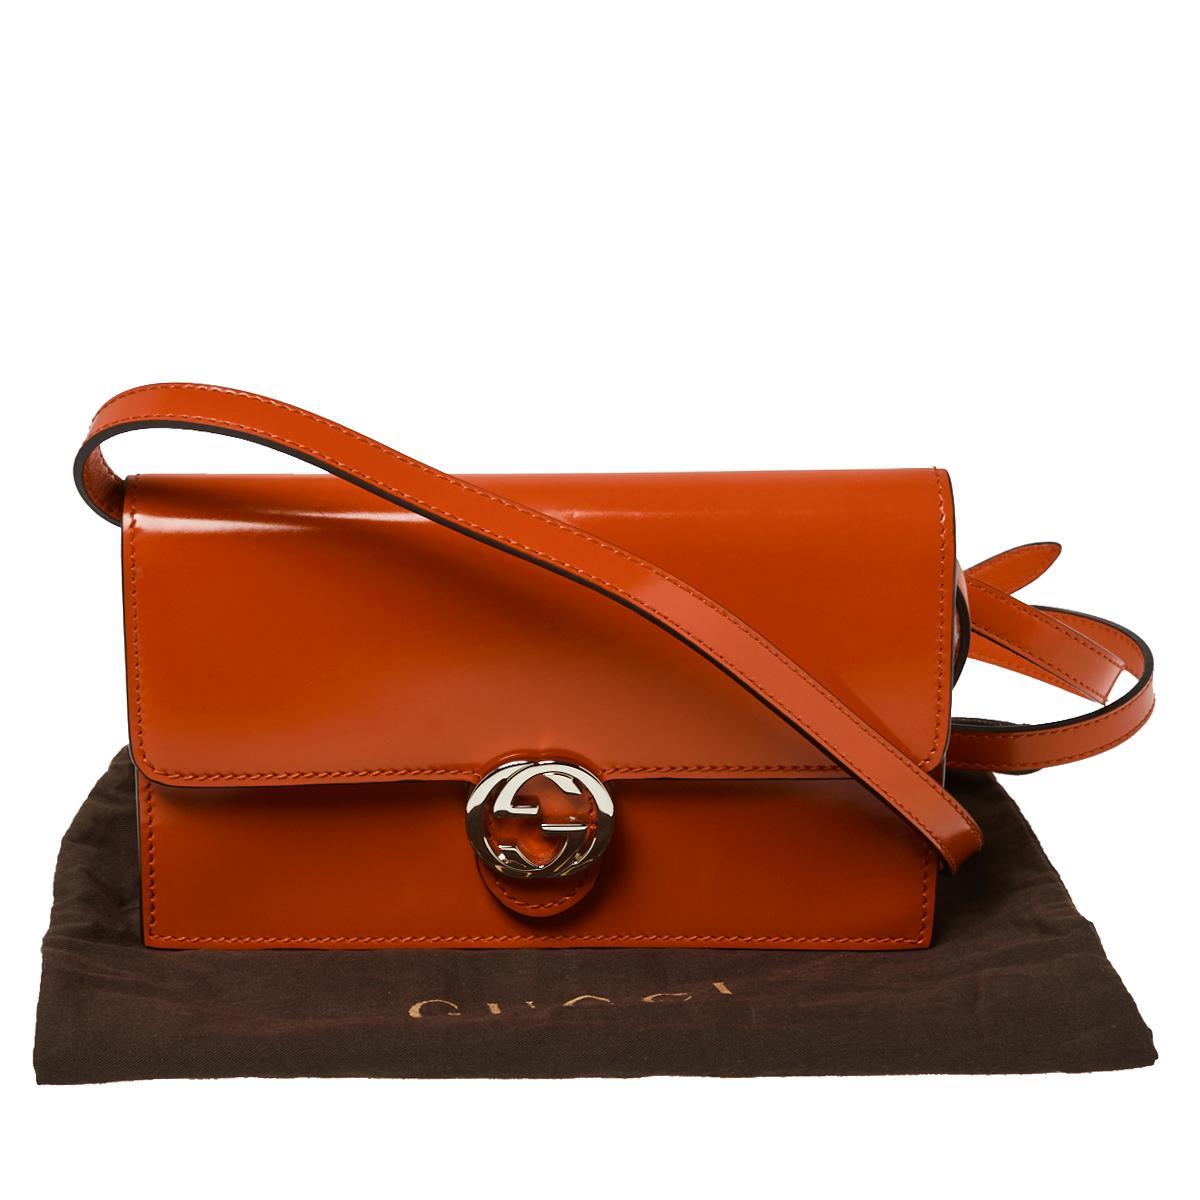 Gucci Orange Patent Leather Interlocking G Flap Clutch Bag 6